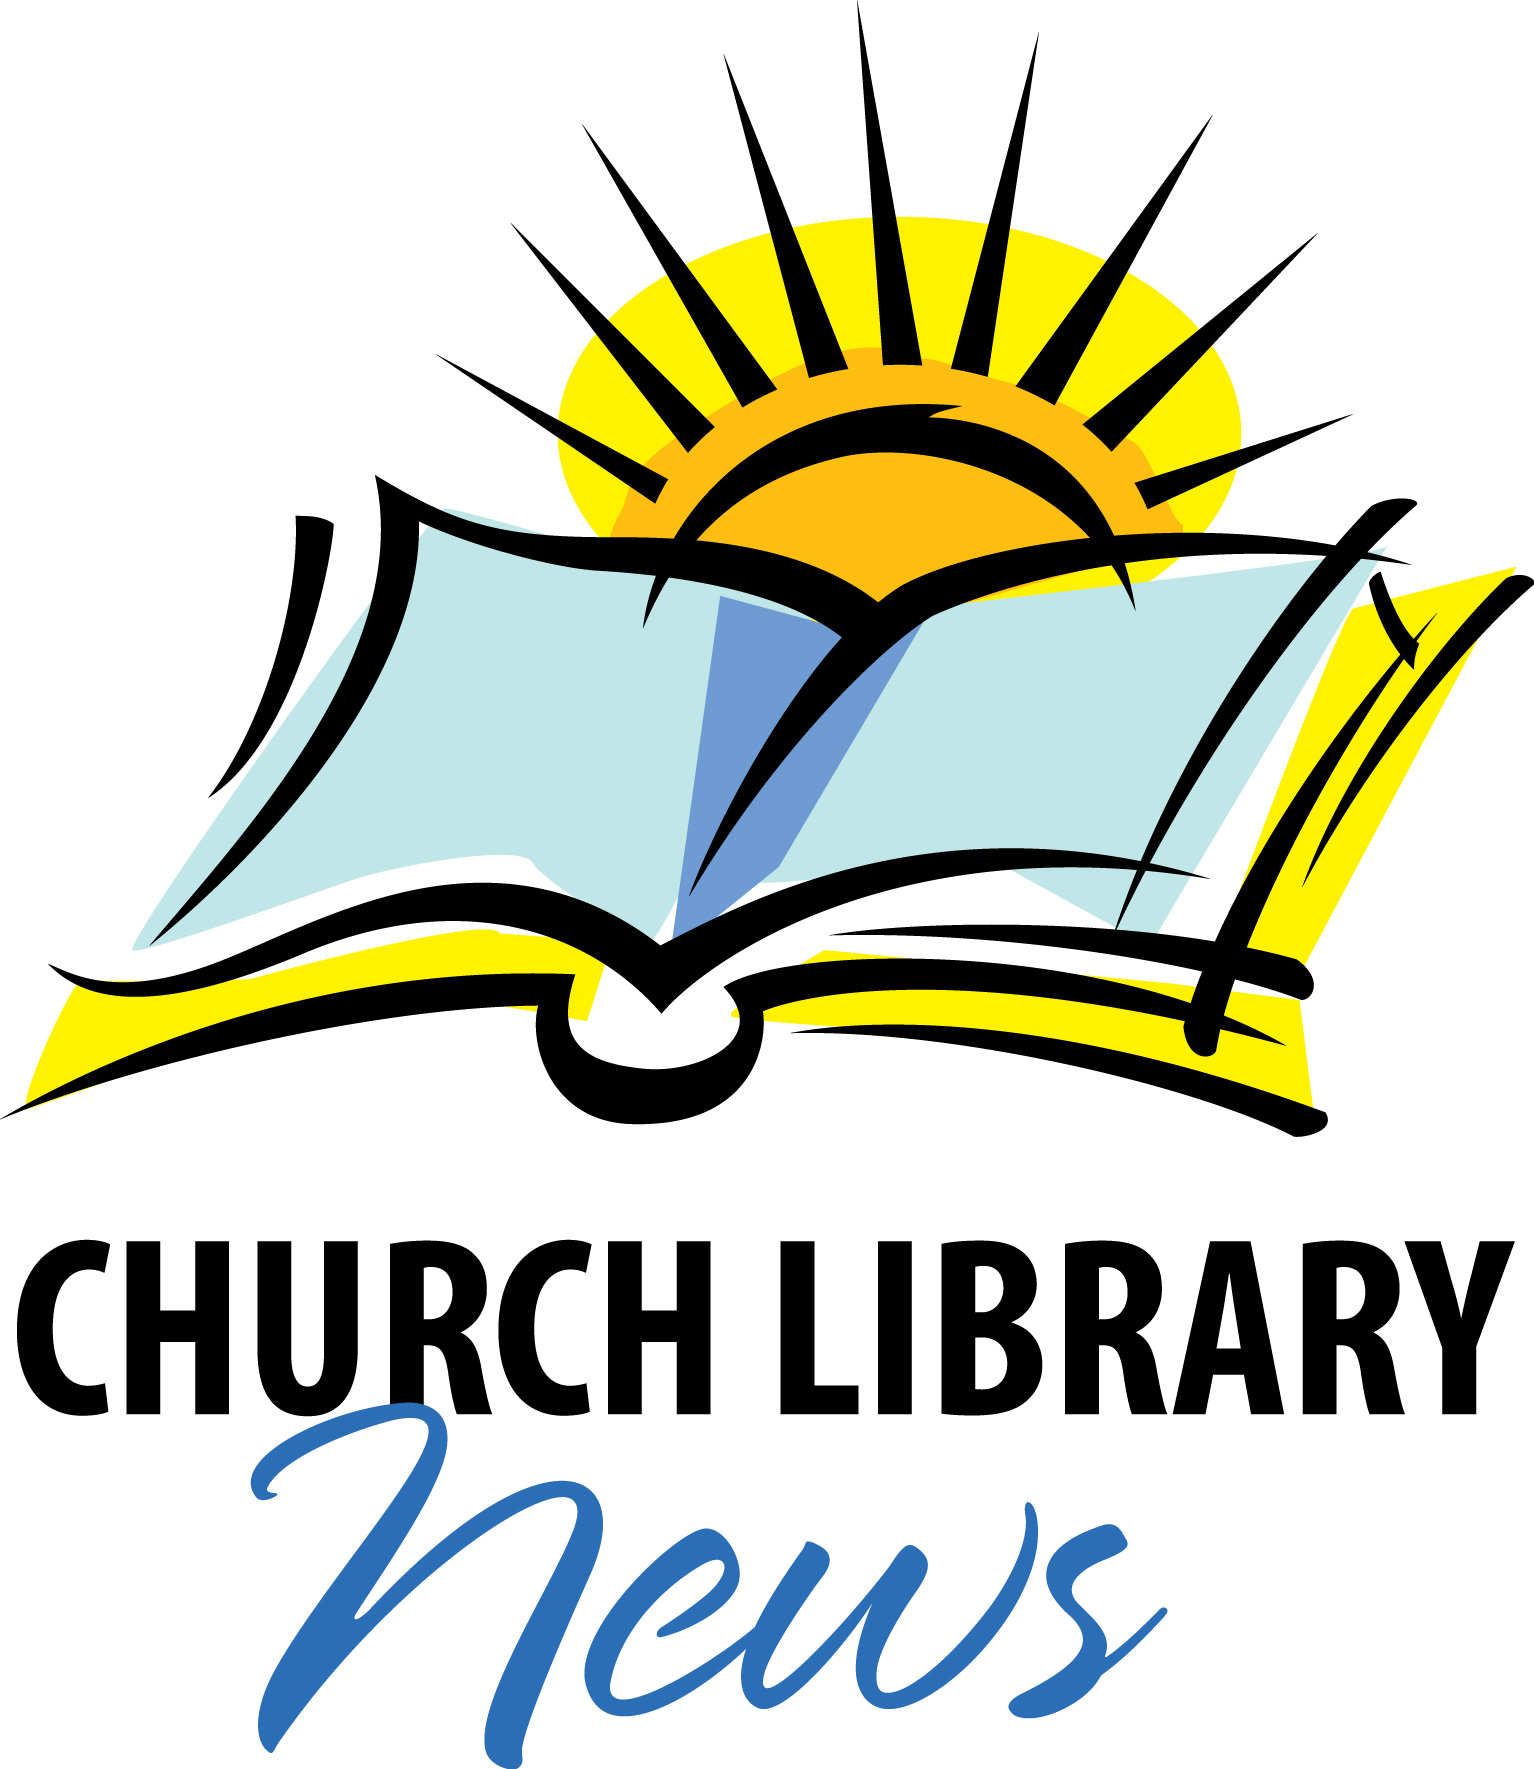 newsletter clipart library news